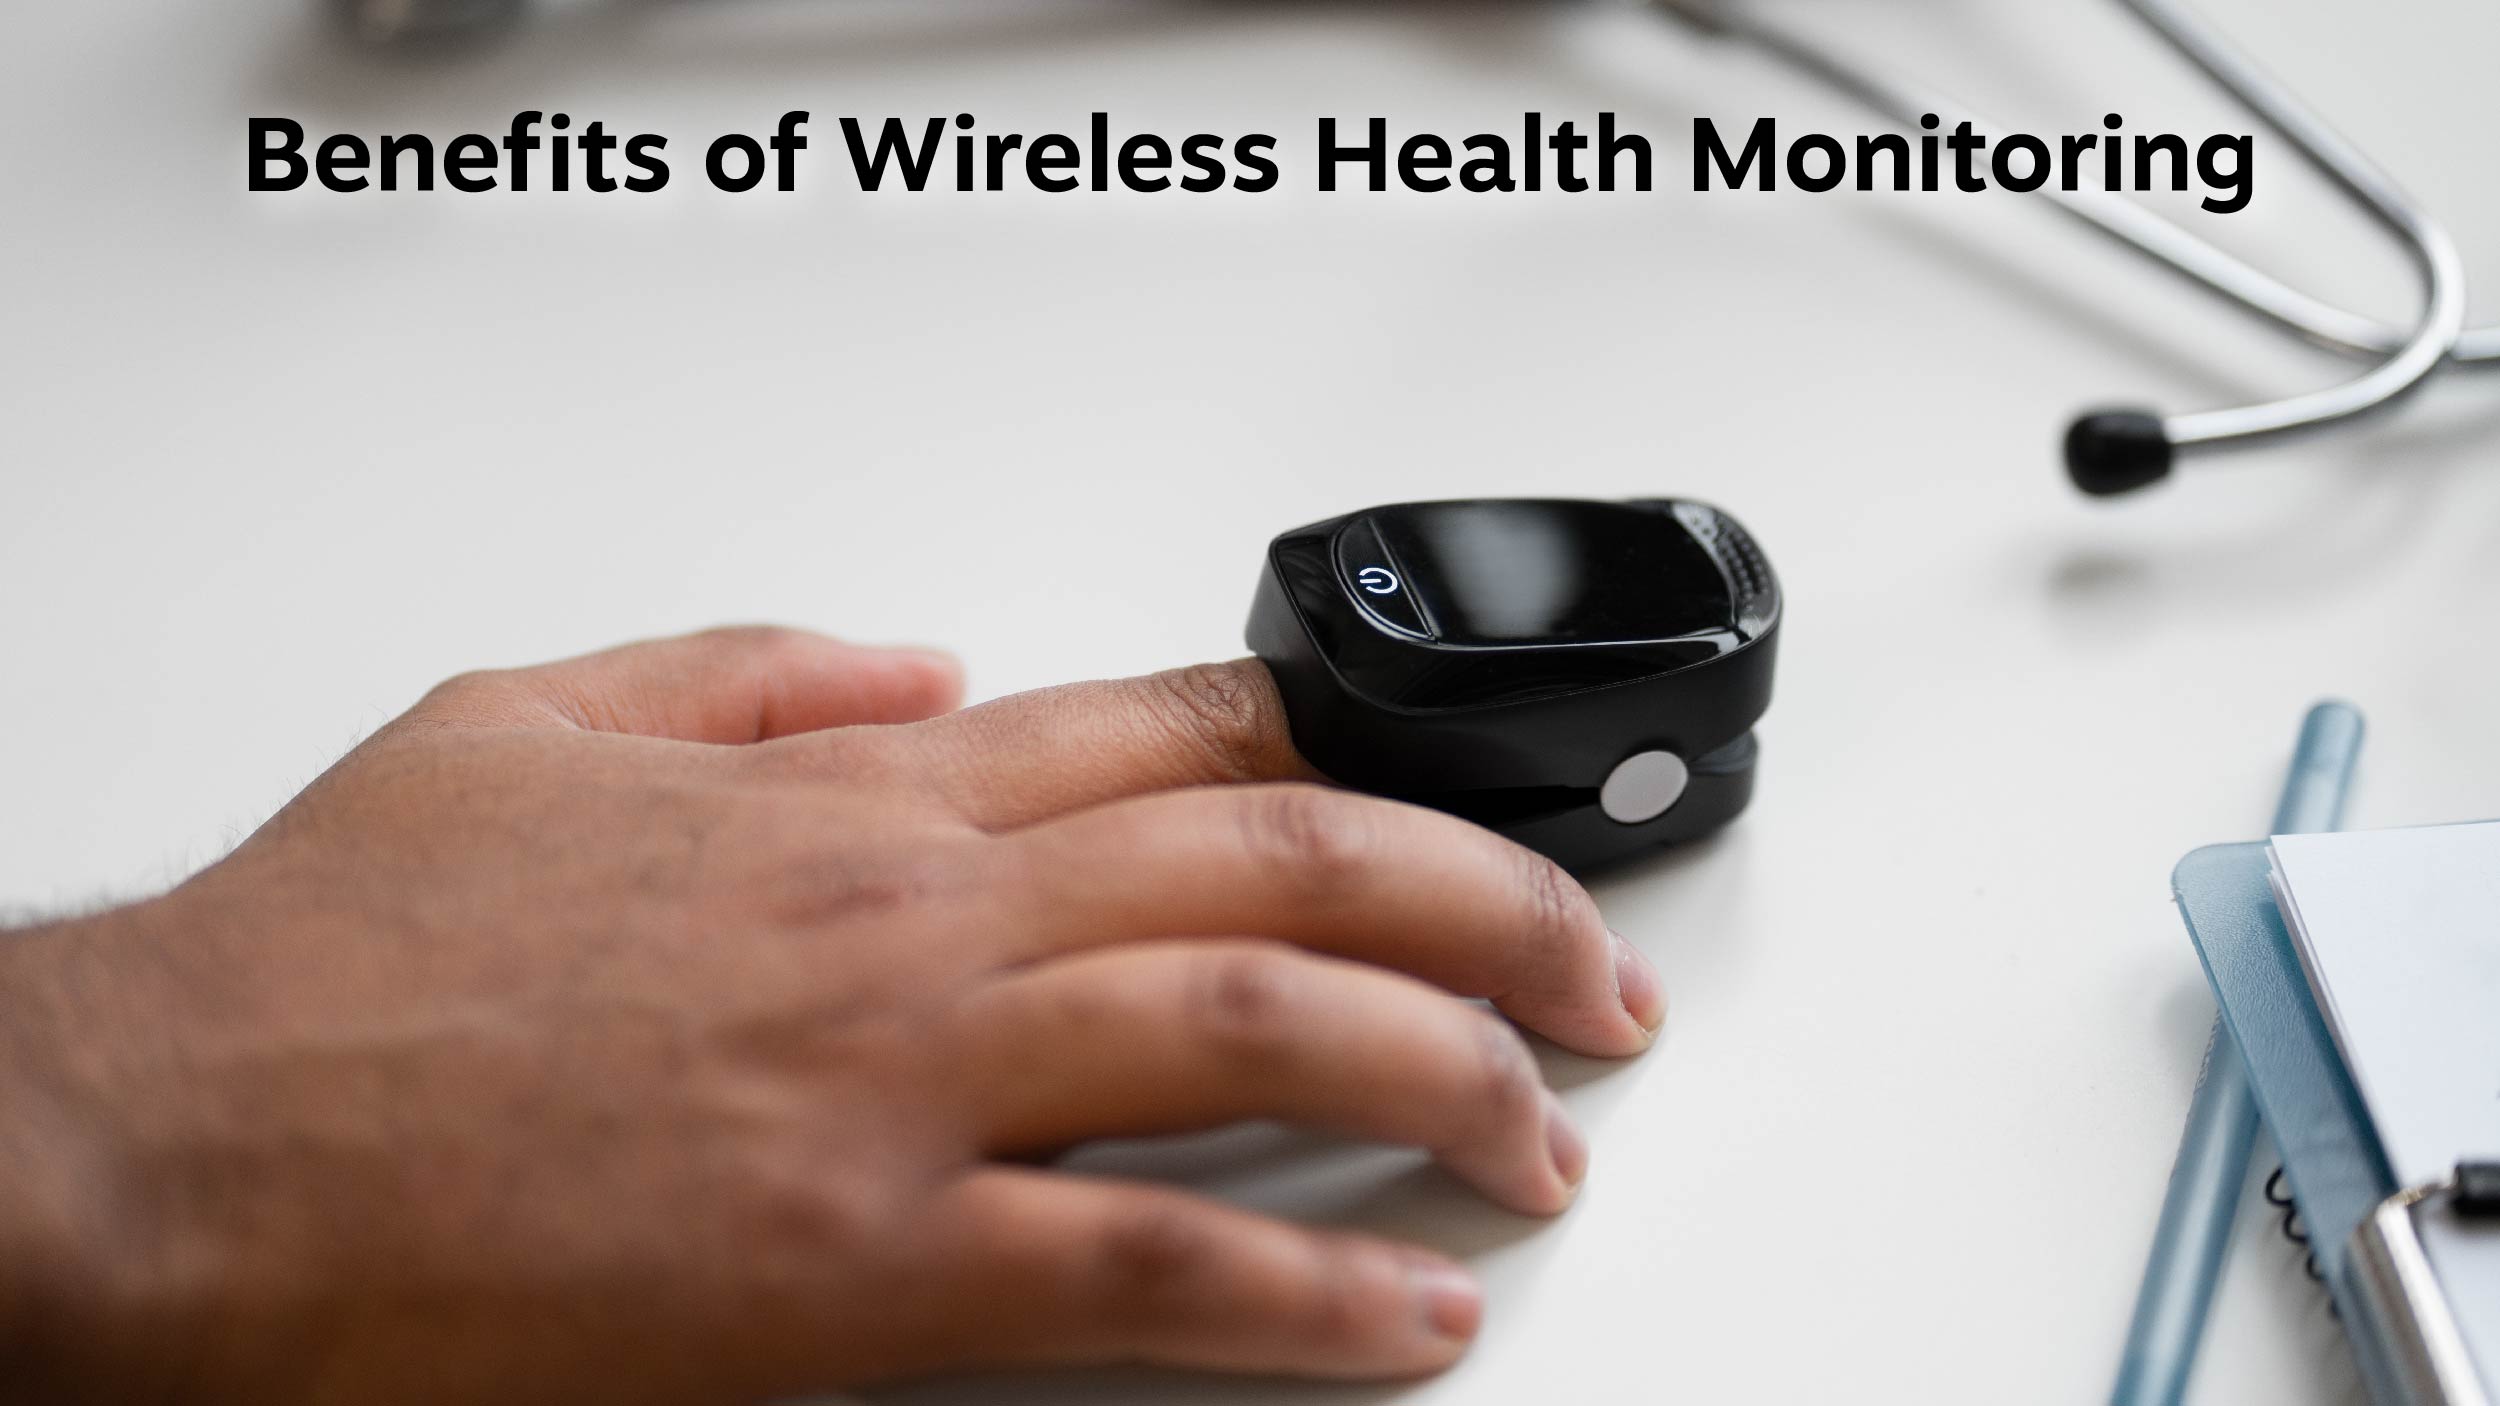 Wireless Health Monitoring